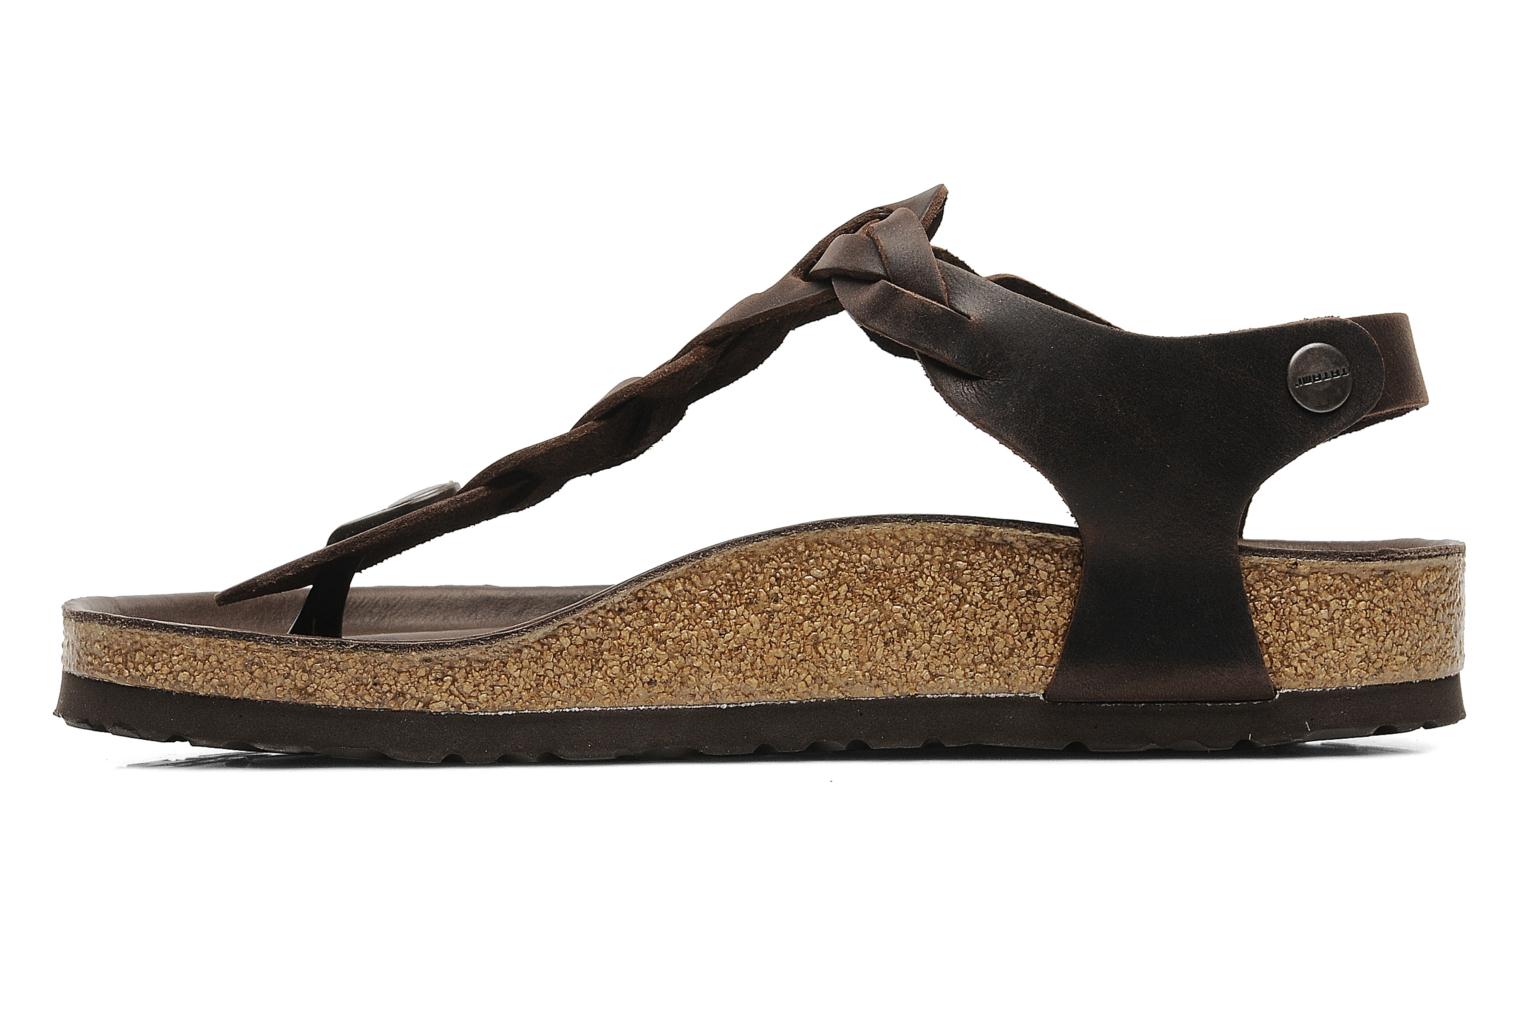 Tatami By Birkenstock Kairo Cuir W Sandals in Brown at Sarenza ...